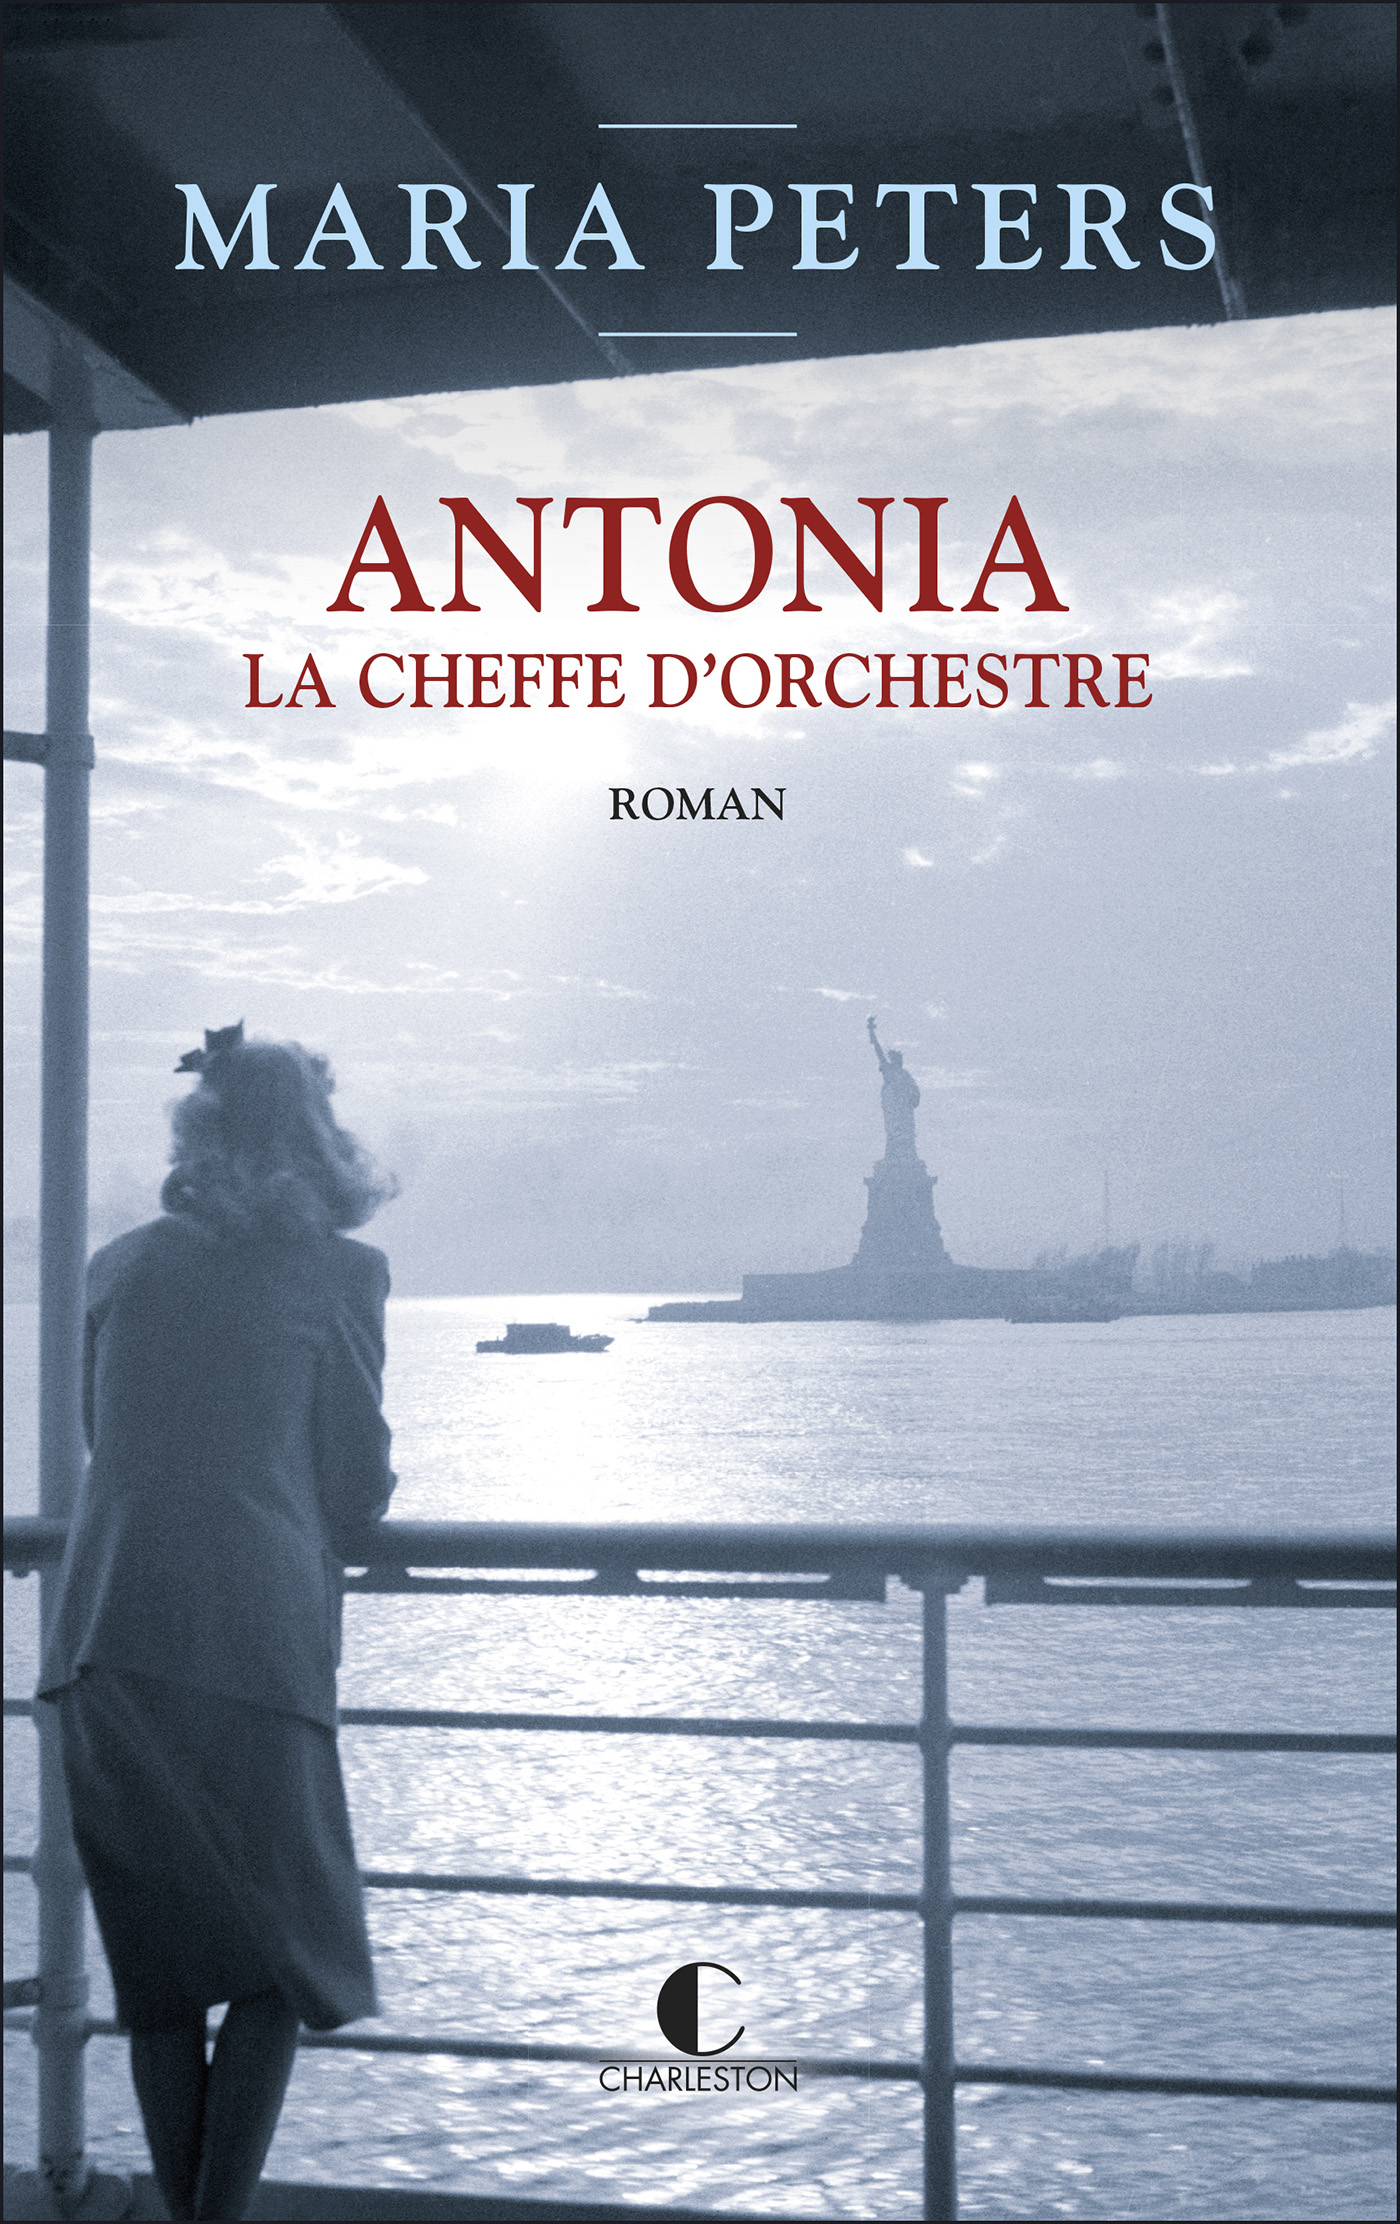 Afficher "Antonia, la Cheffe d'orchestre"